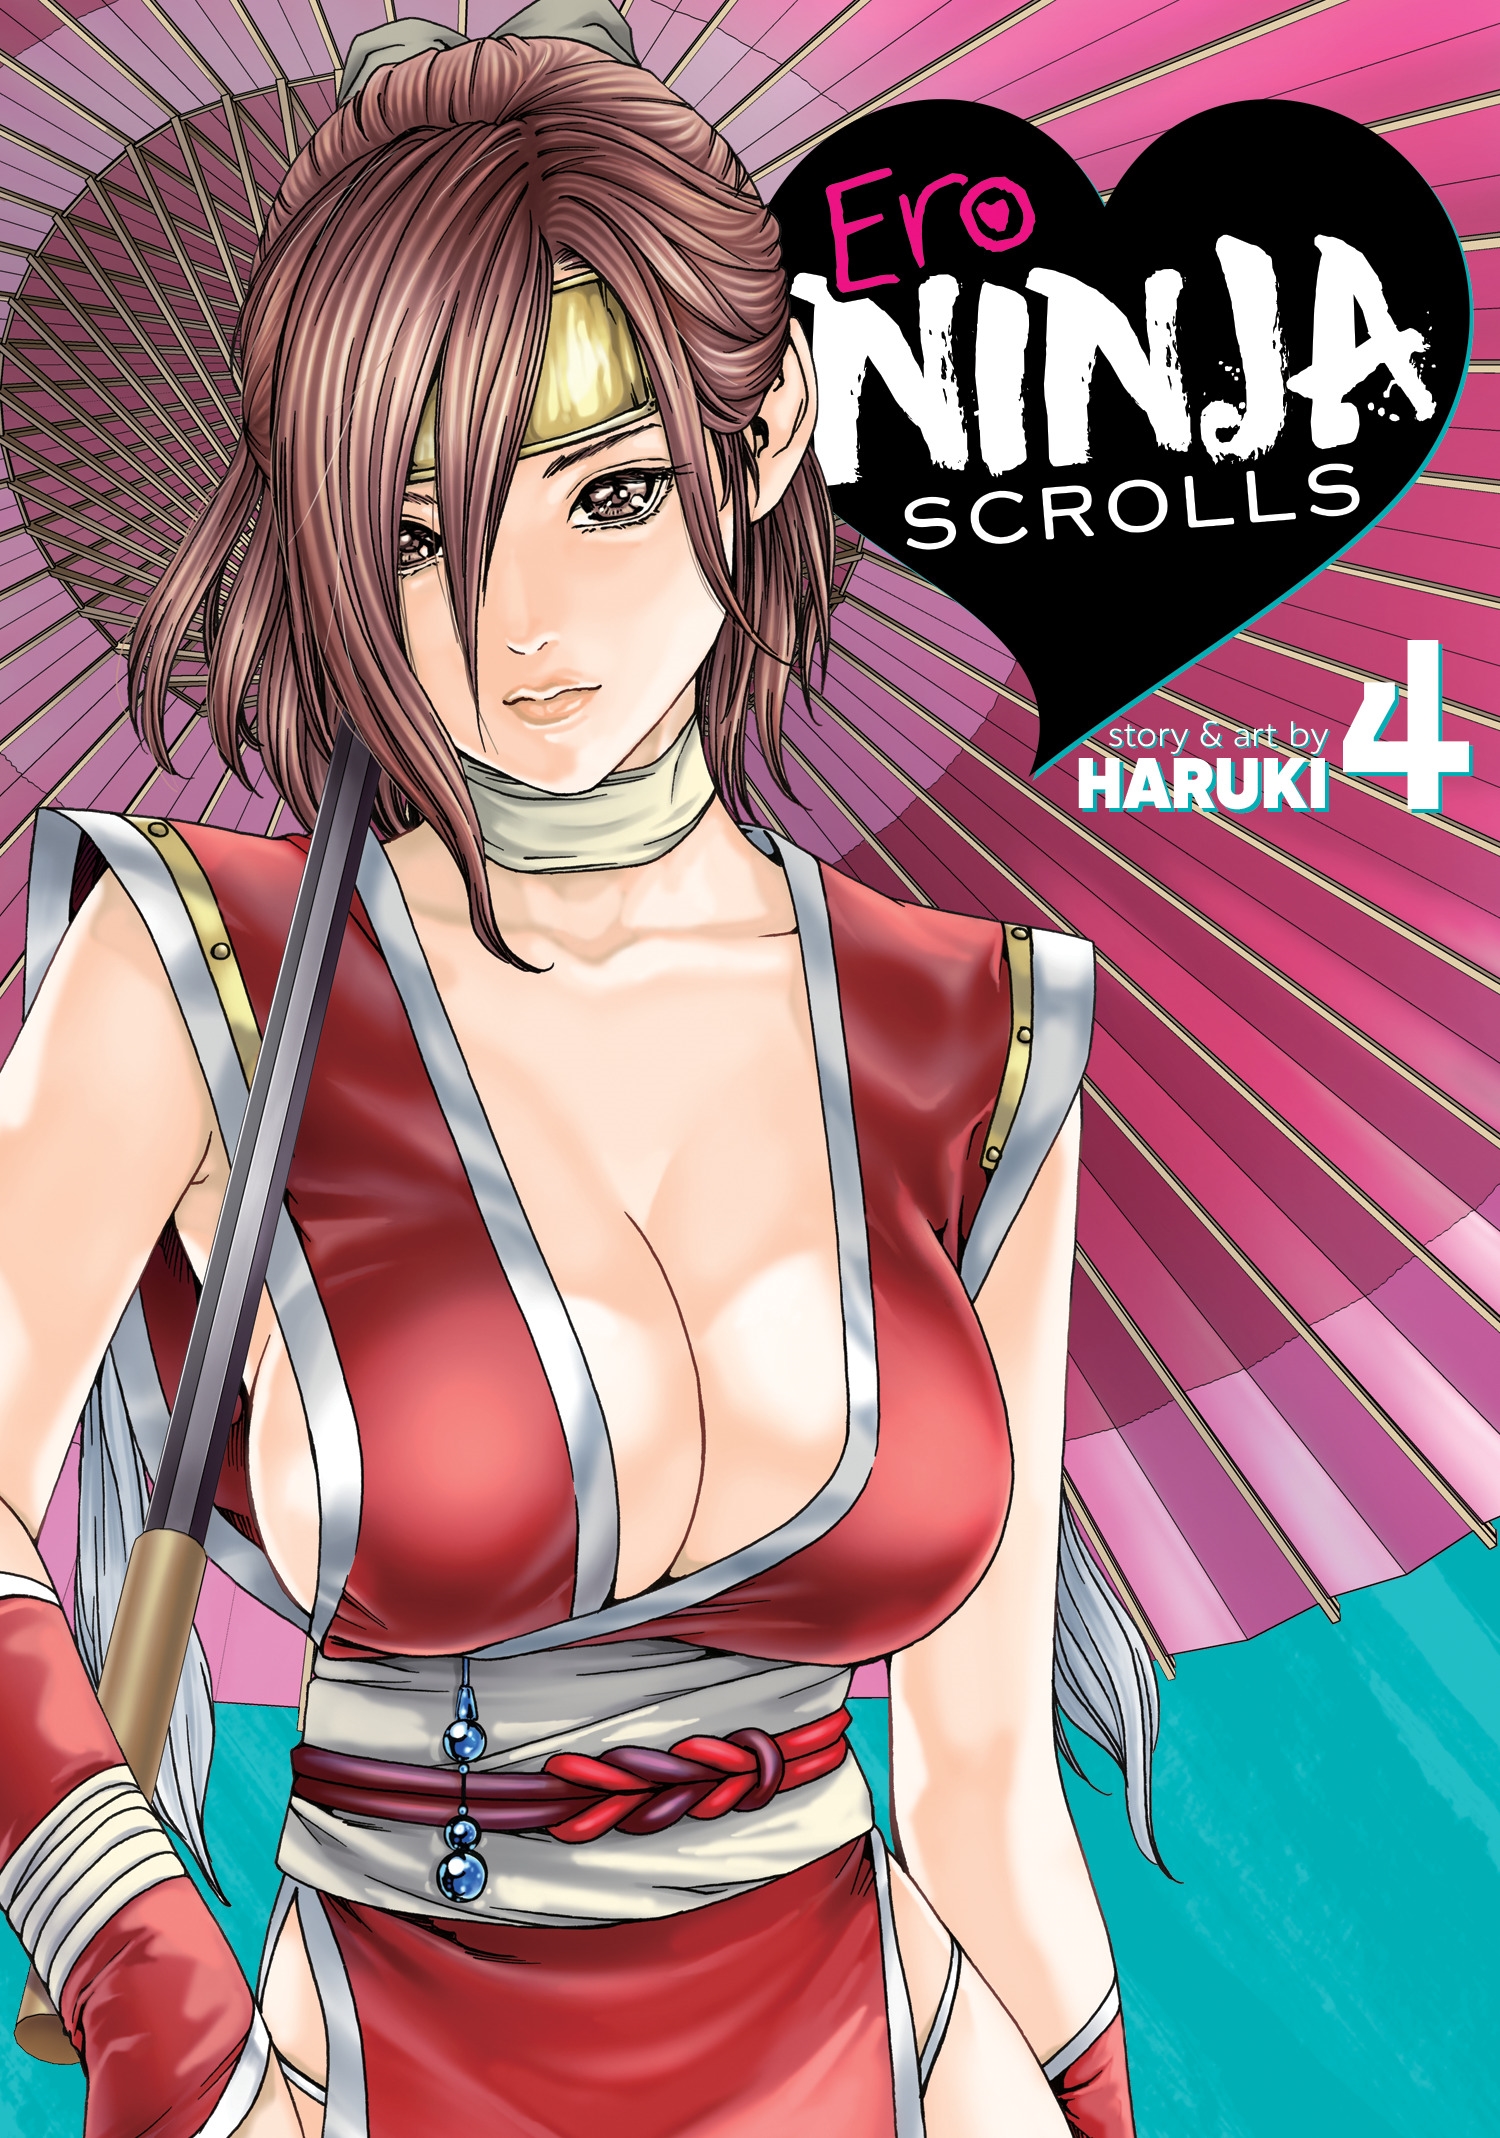 Ero Ninja Scrolls Vol. 4 by Haruki - Penguin Books Australia